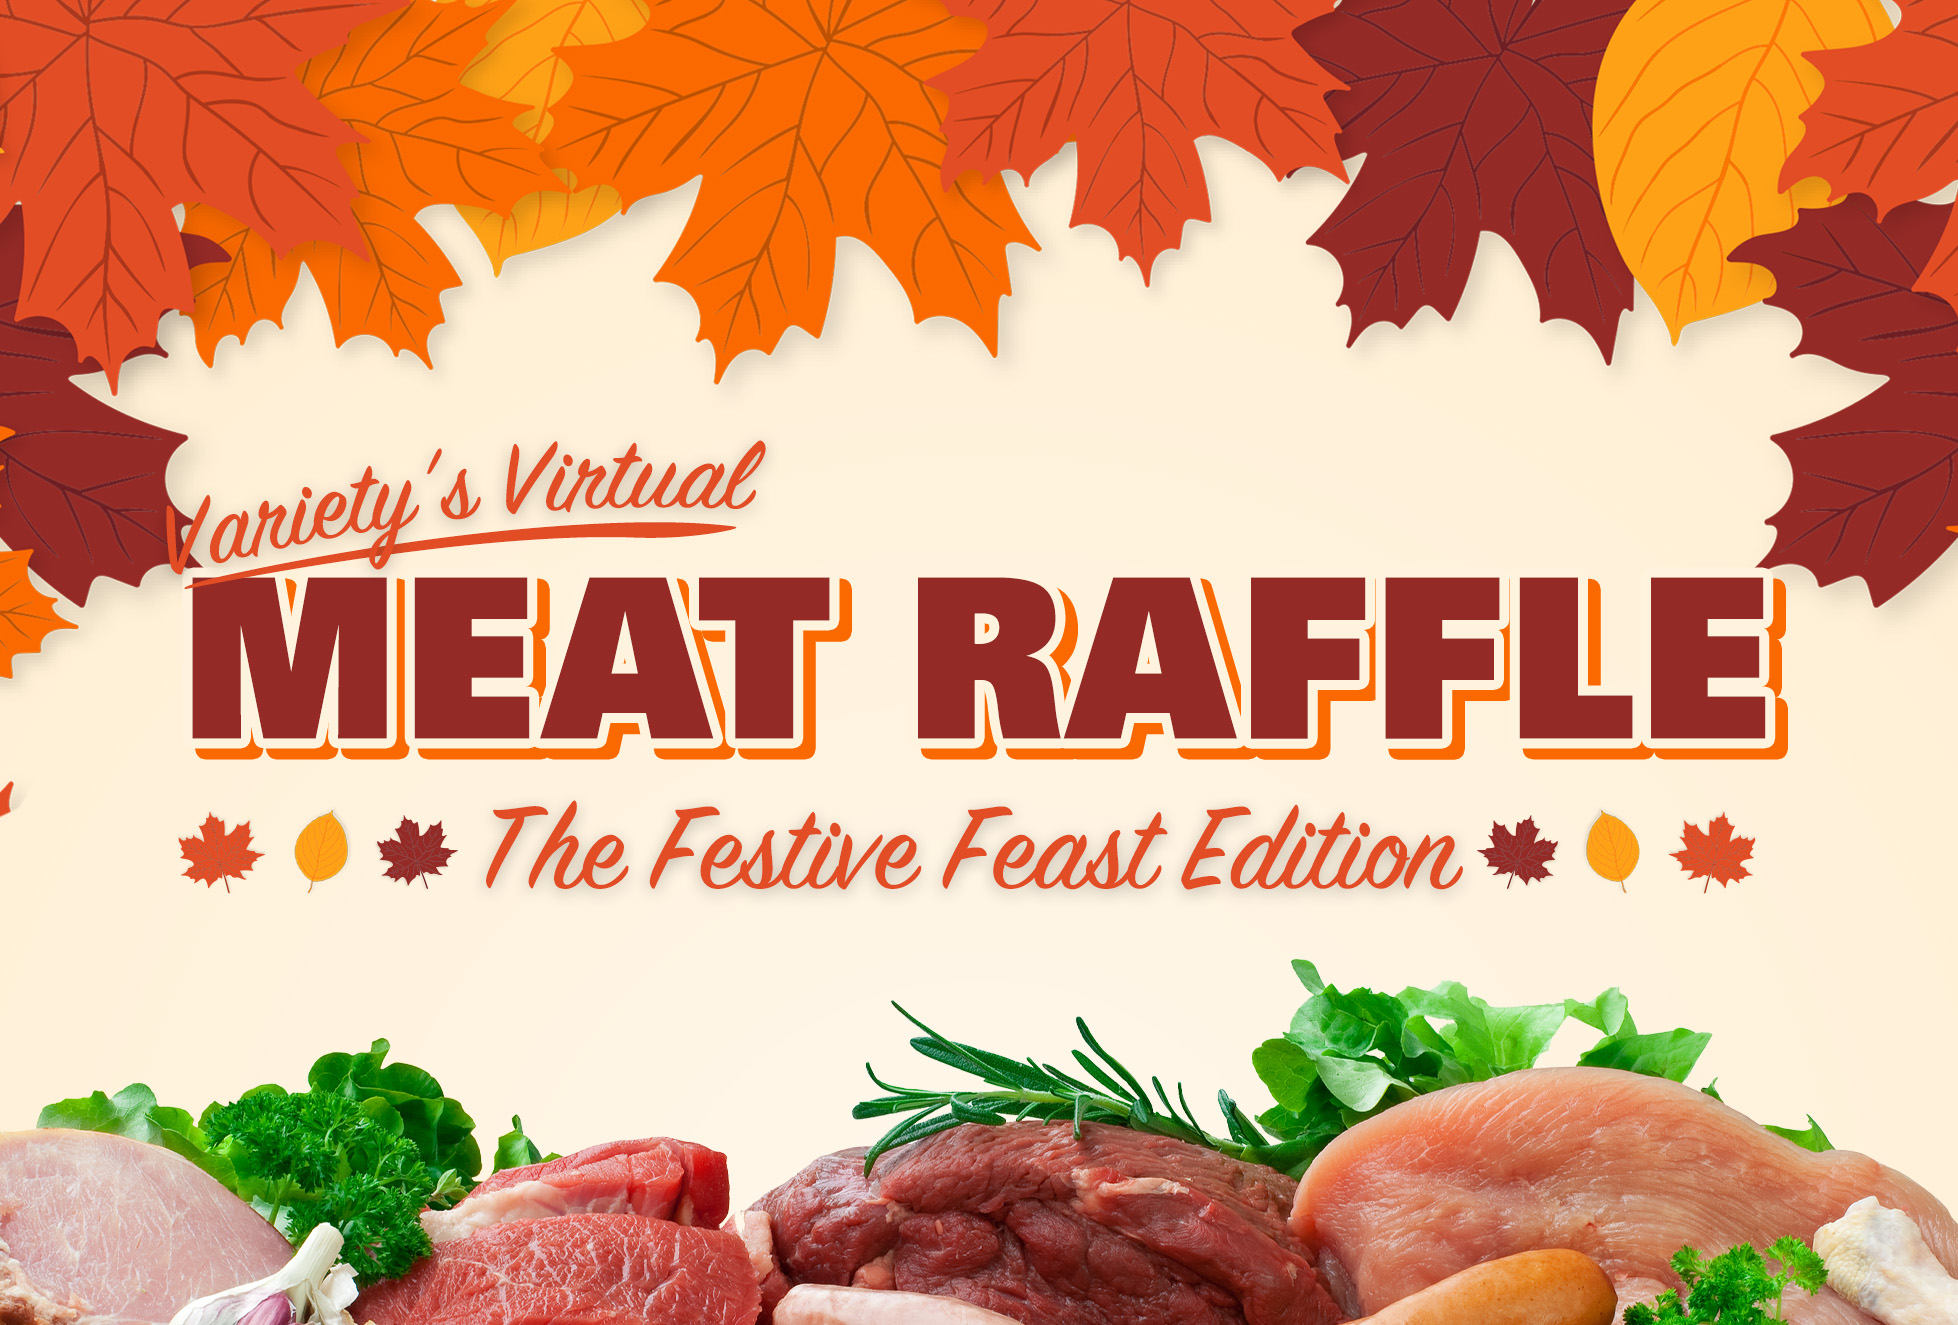 Variety’s Virtual Meat Raffle: The Festive Feast Edition!